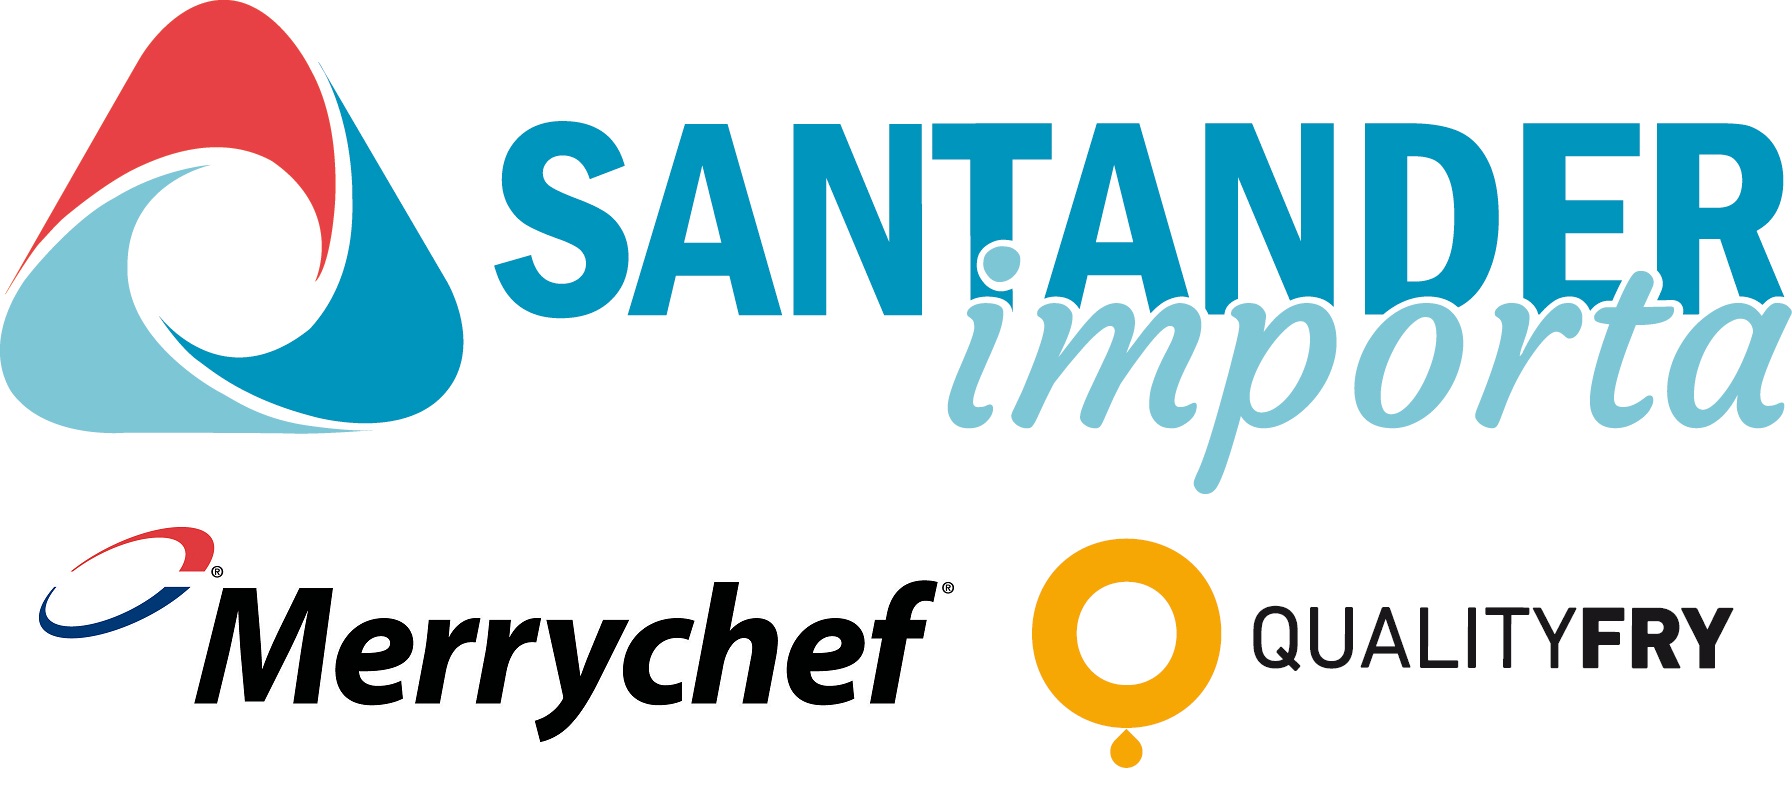 Santander Importa - Merrychef - Quality